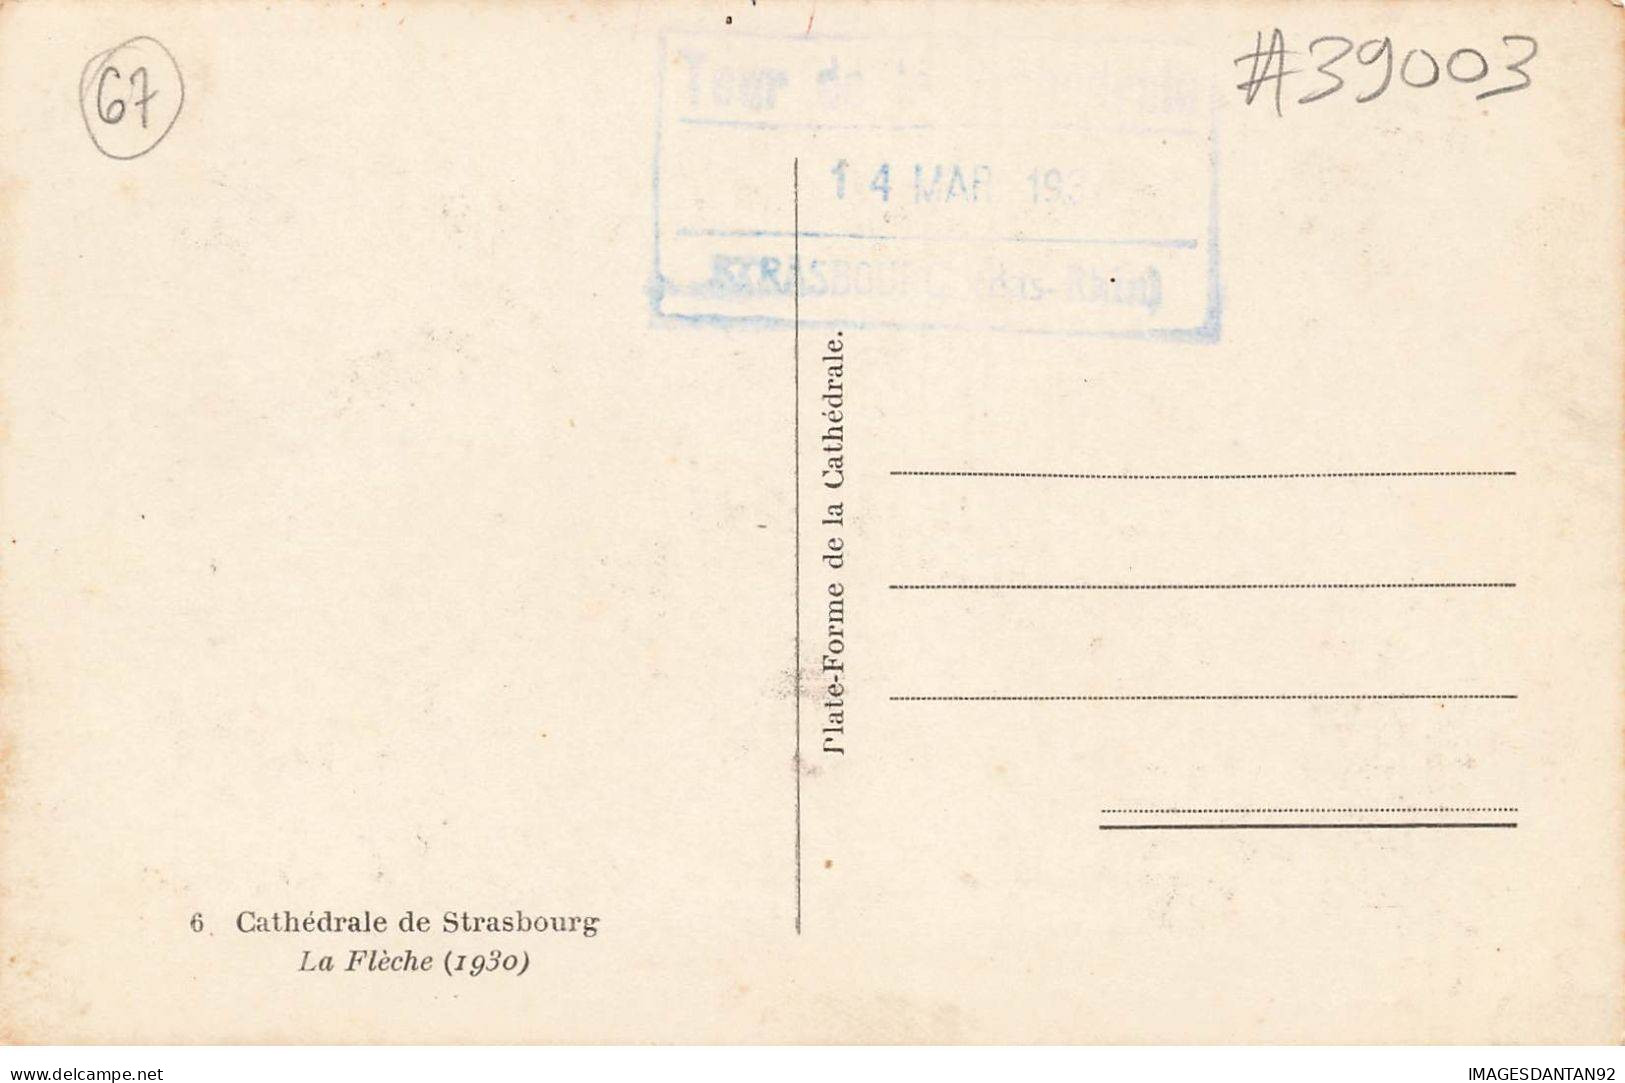 67 STRASBOURG #AS39003 CATHEDRALE DE STRASBOURG LA FLECHE 1930 - Strasbourg